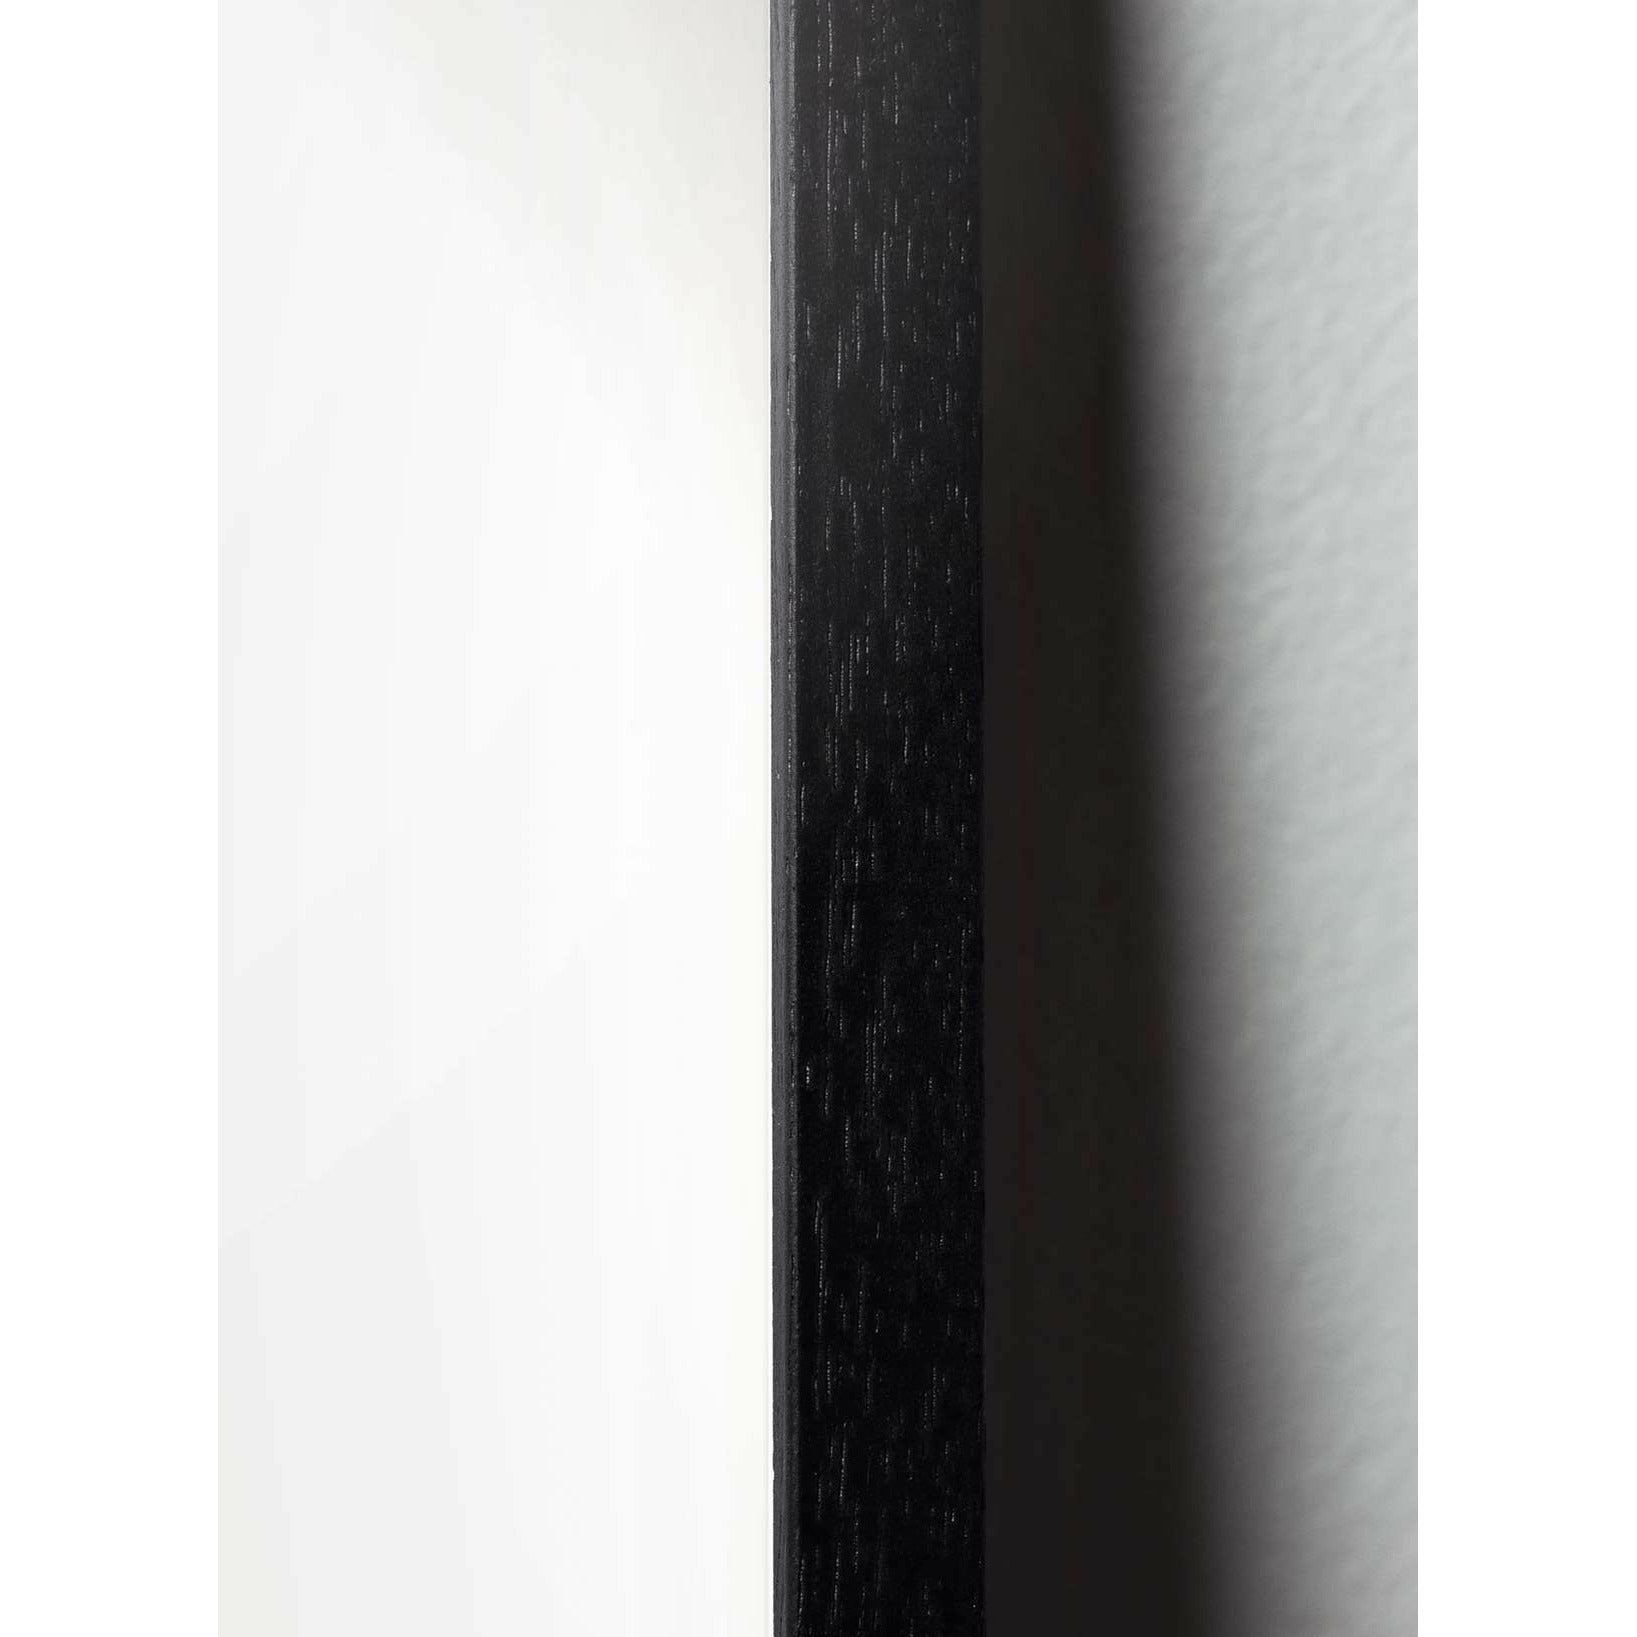 Brainchild Ant klassisk affisch, ram i svart -målat trä 30x40 cm, vit bakgrund